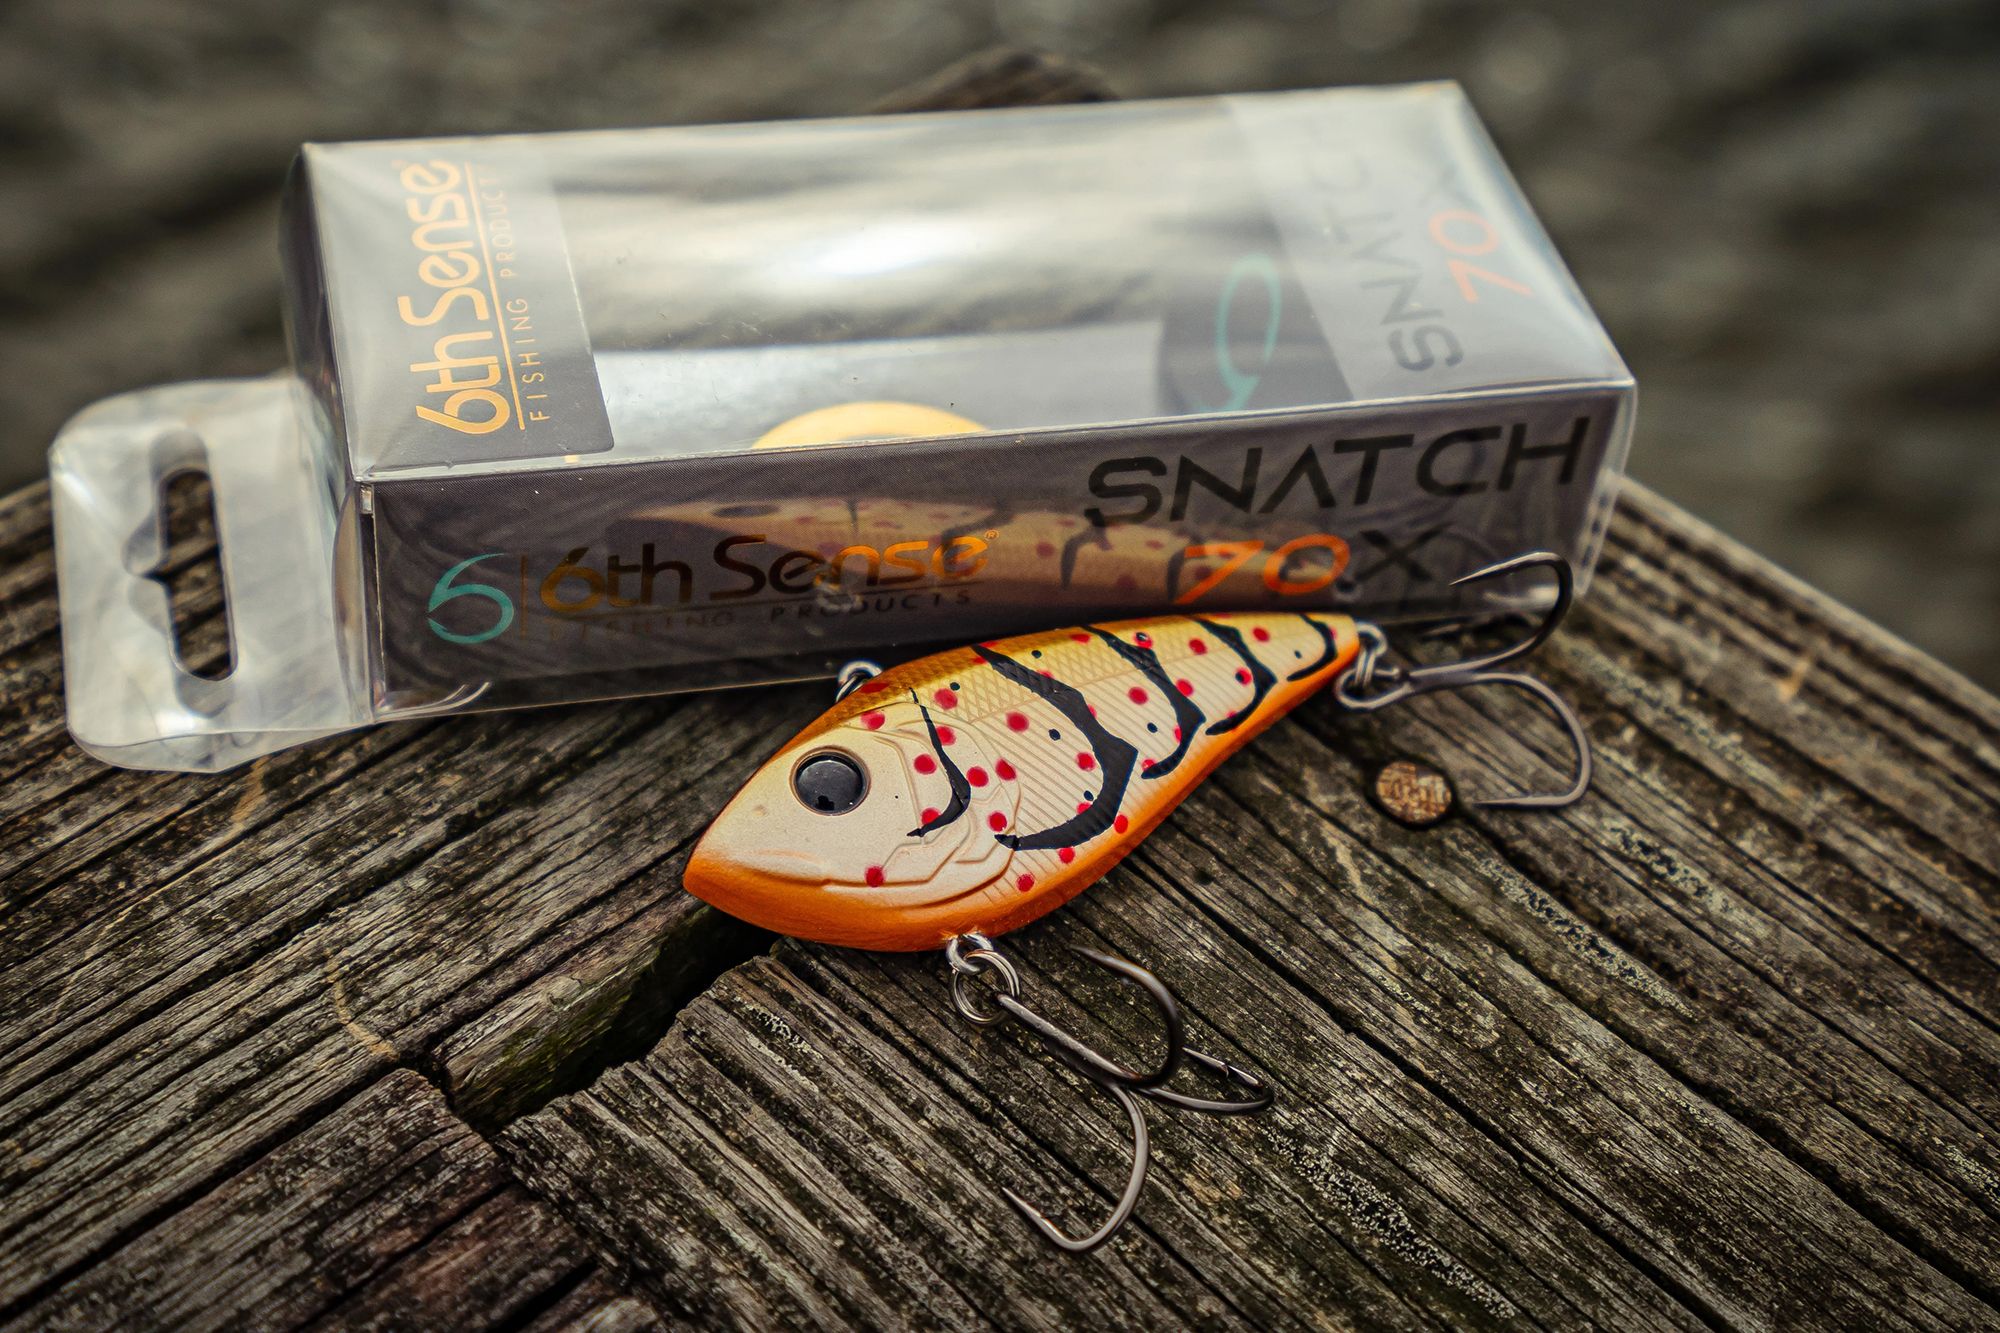 Dick's Sporting Goods 6th Sense Fishing Snatch 70X Lipless Crankbait